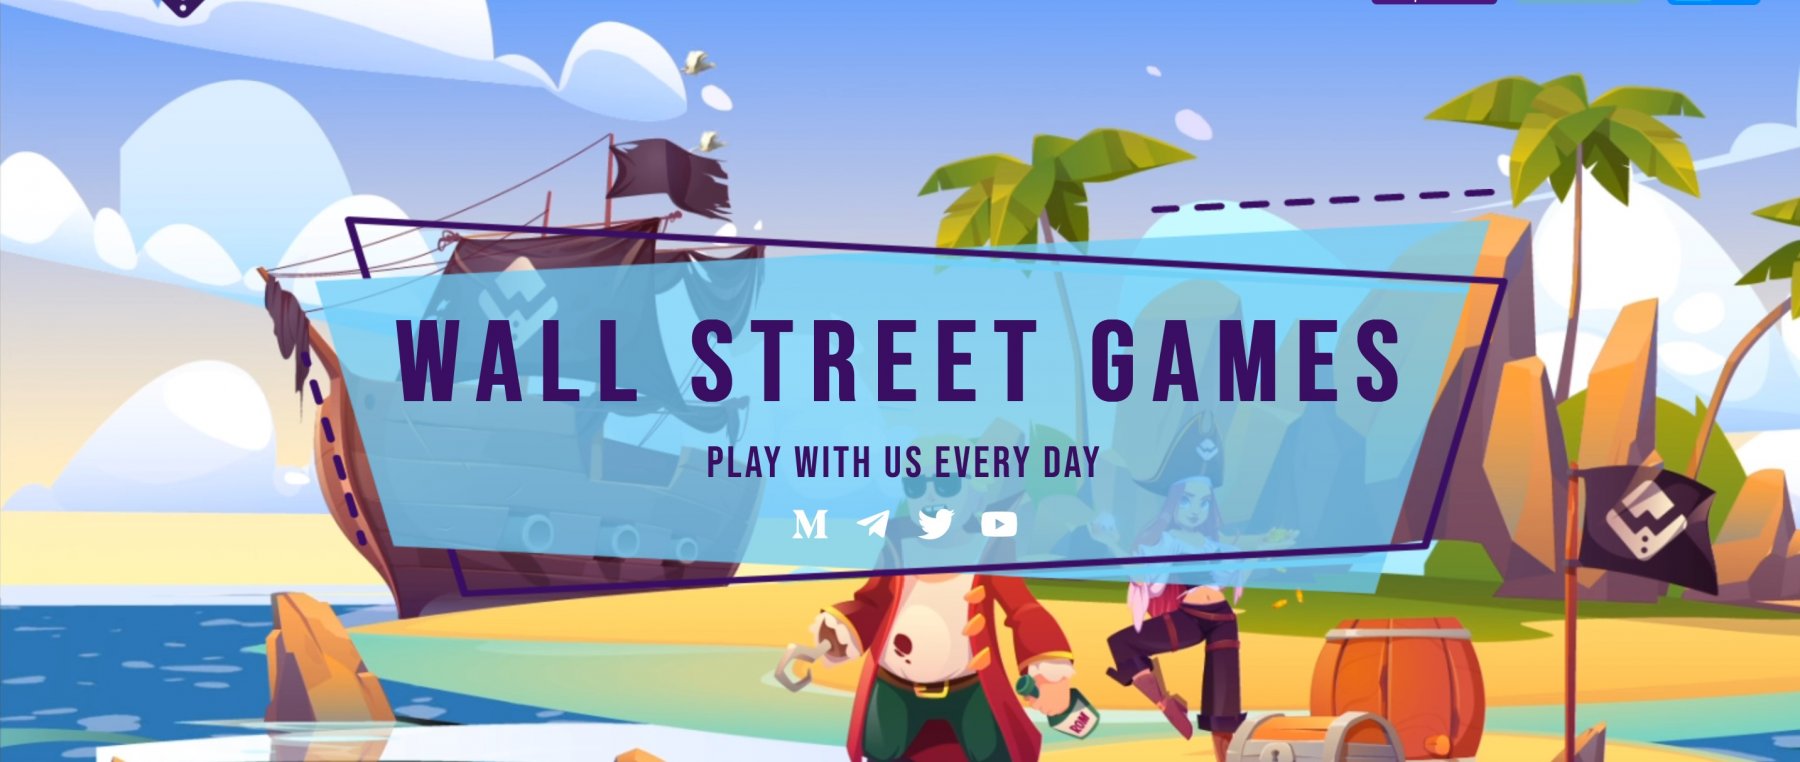 Wall street games